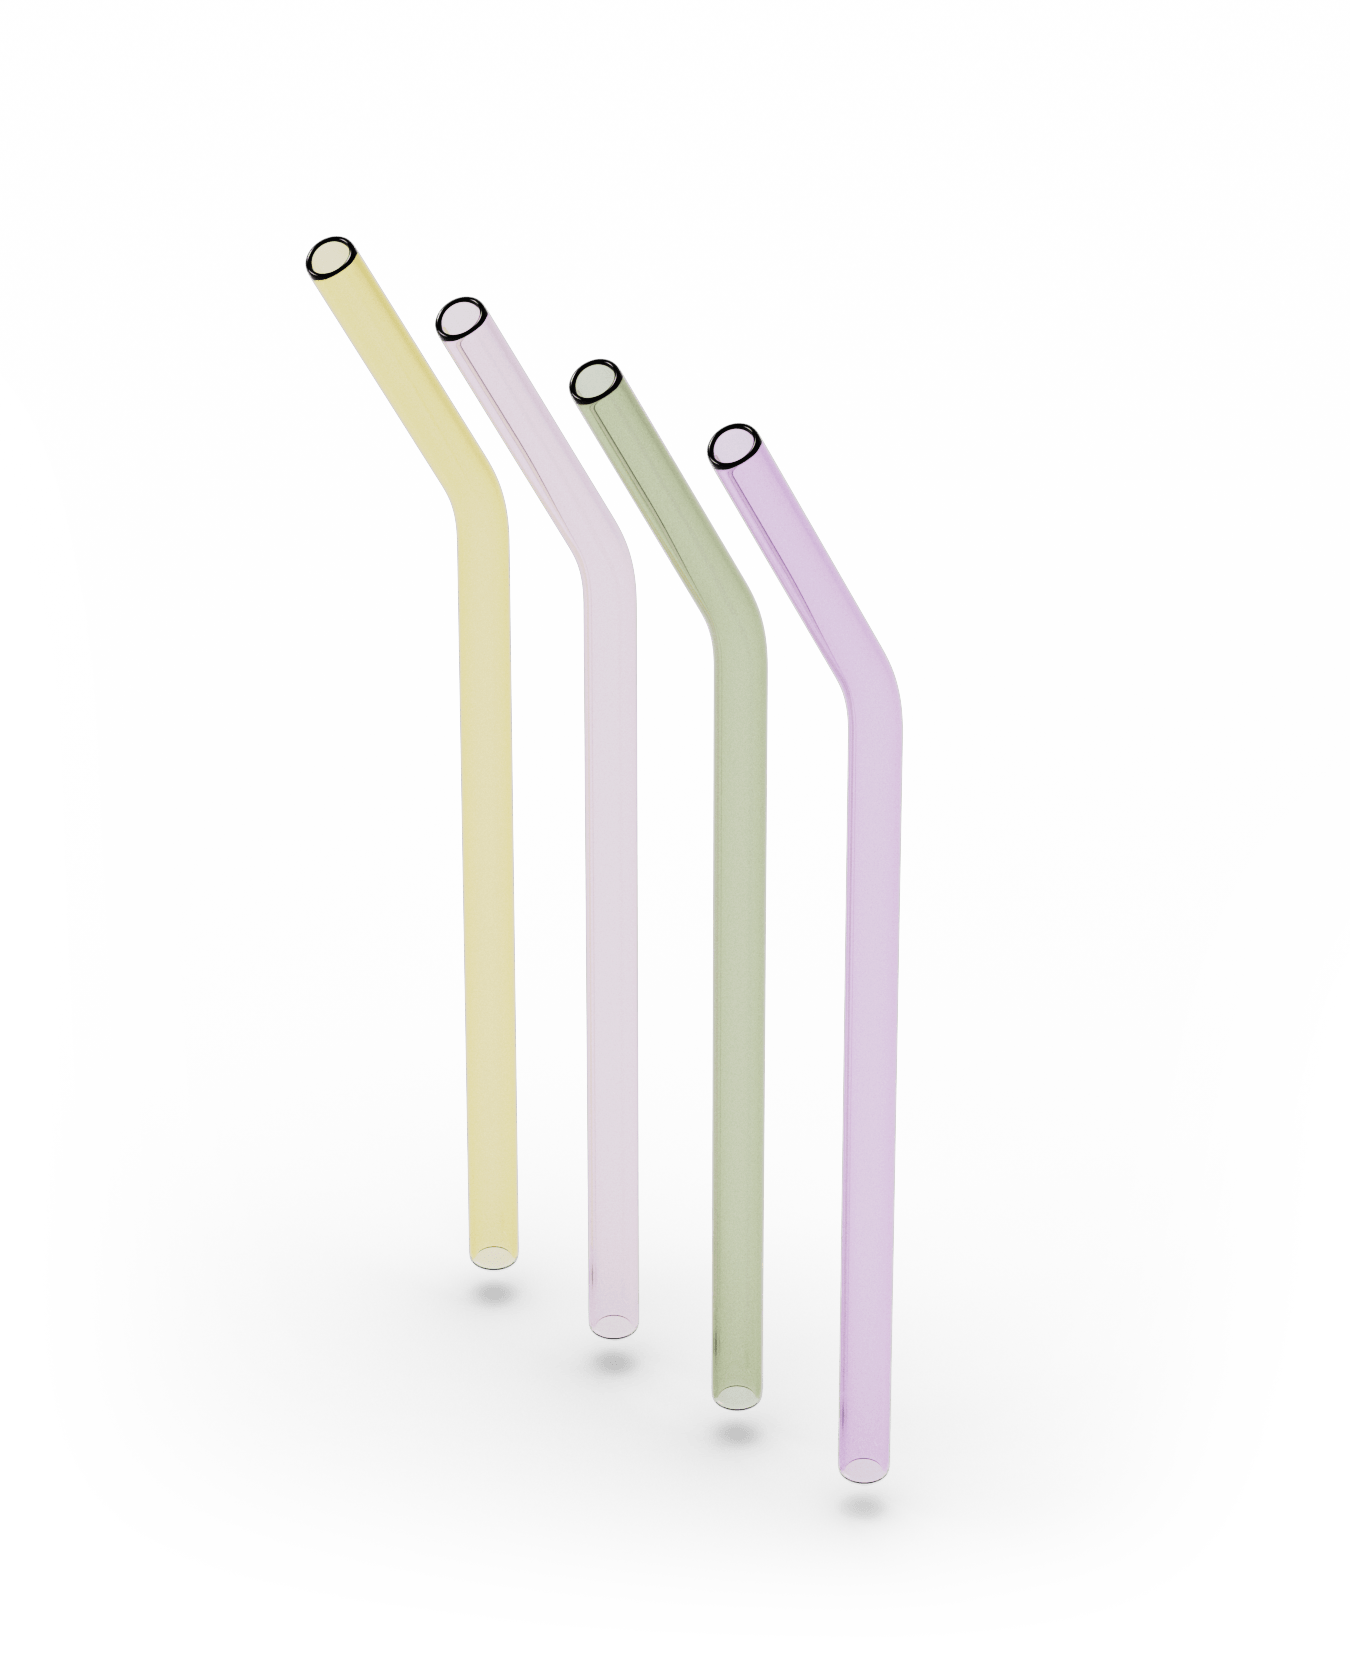 Matcha glass set incl. glass straws- limited edition